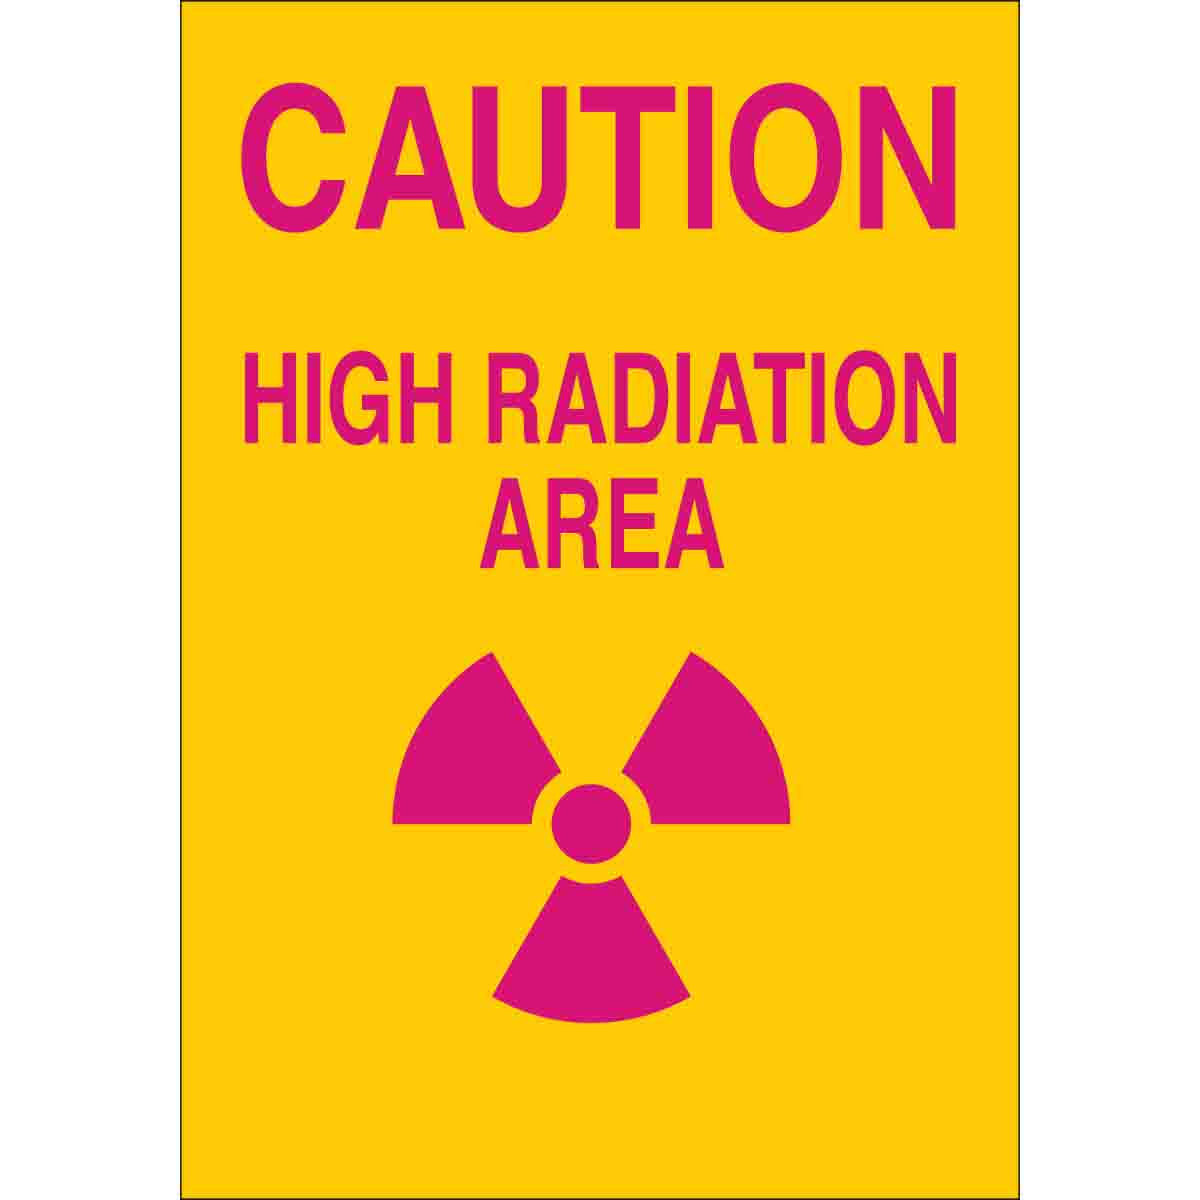 NEW Brady 25270 7" x 10" "Caution High Radiation Area" Plastic Safety Sign